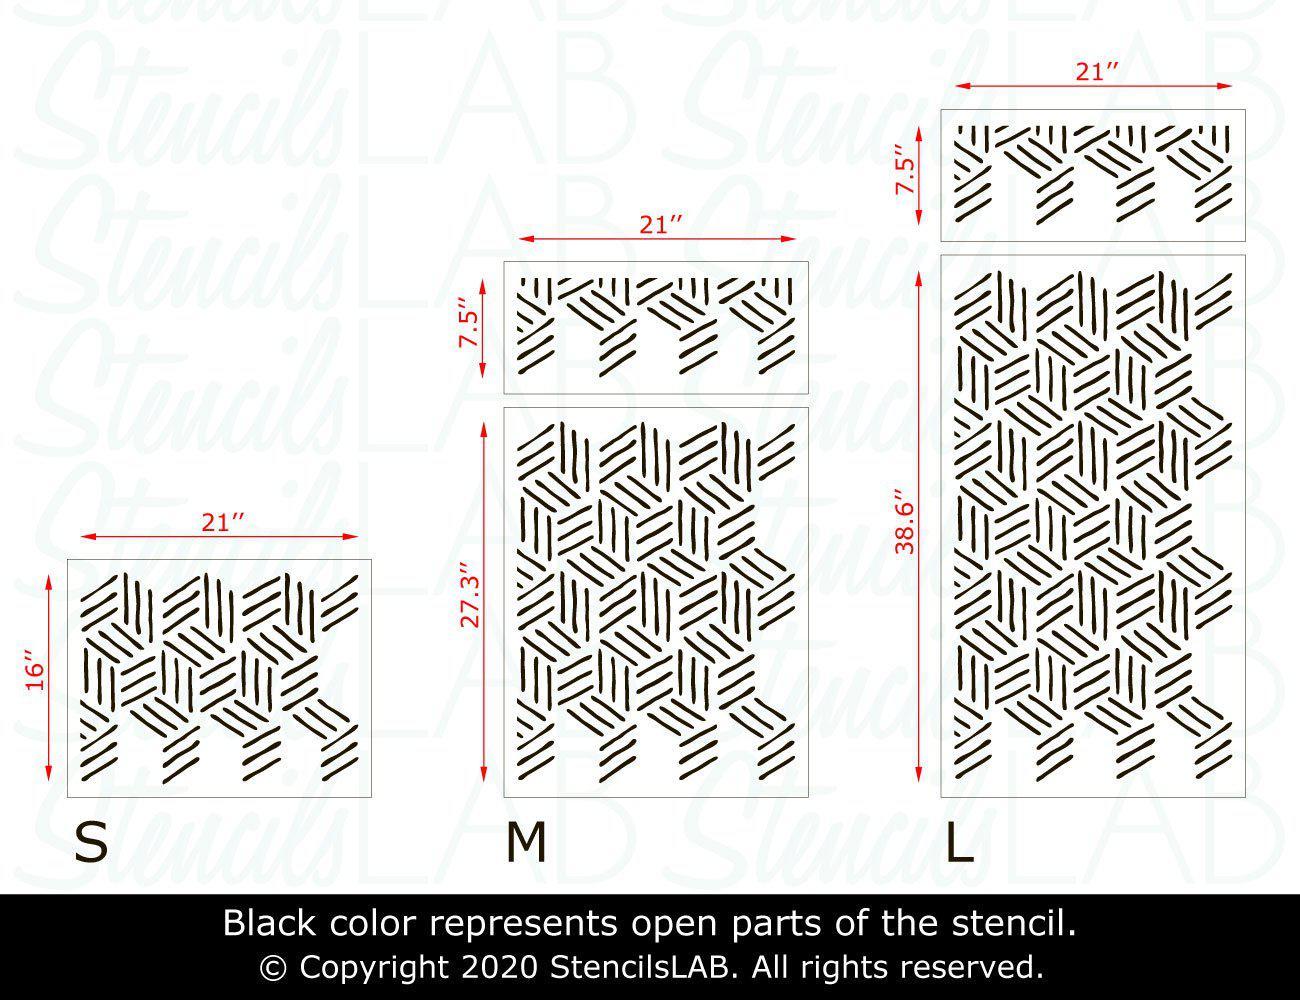 LORTIE- Modern Geometric Wall Stencil- Hexagon Wall Stencil- Reusable Stencils for Painting S (17 x 21.5)